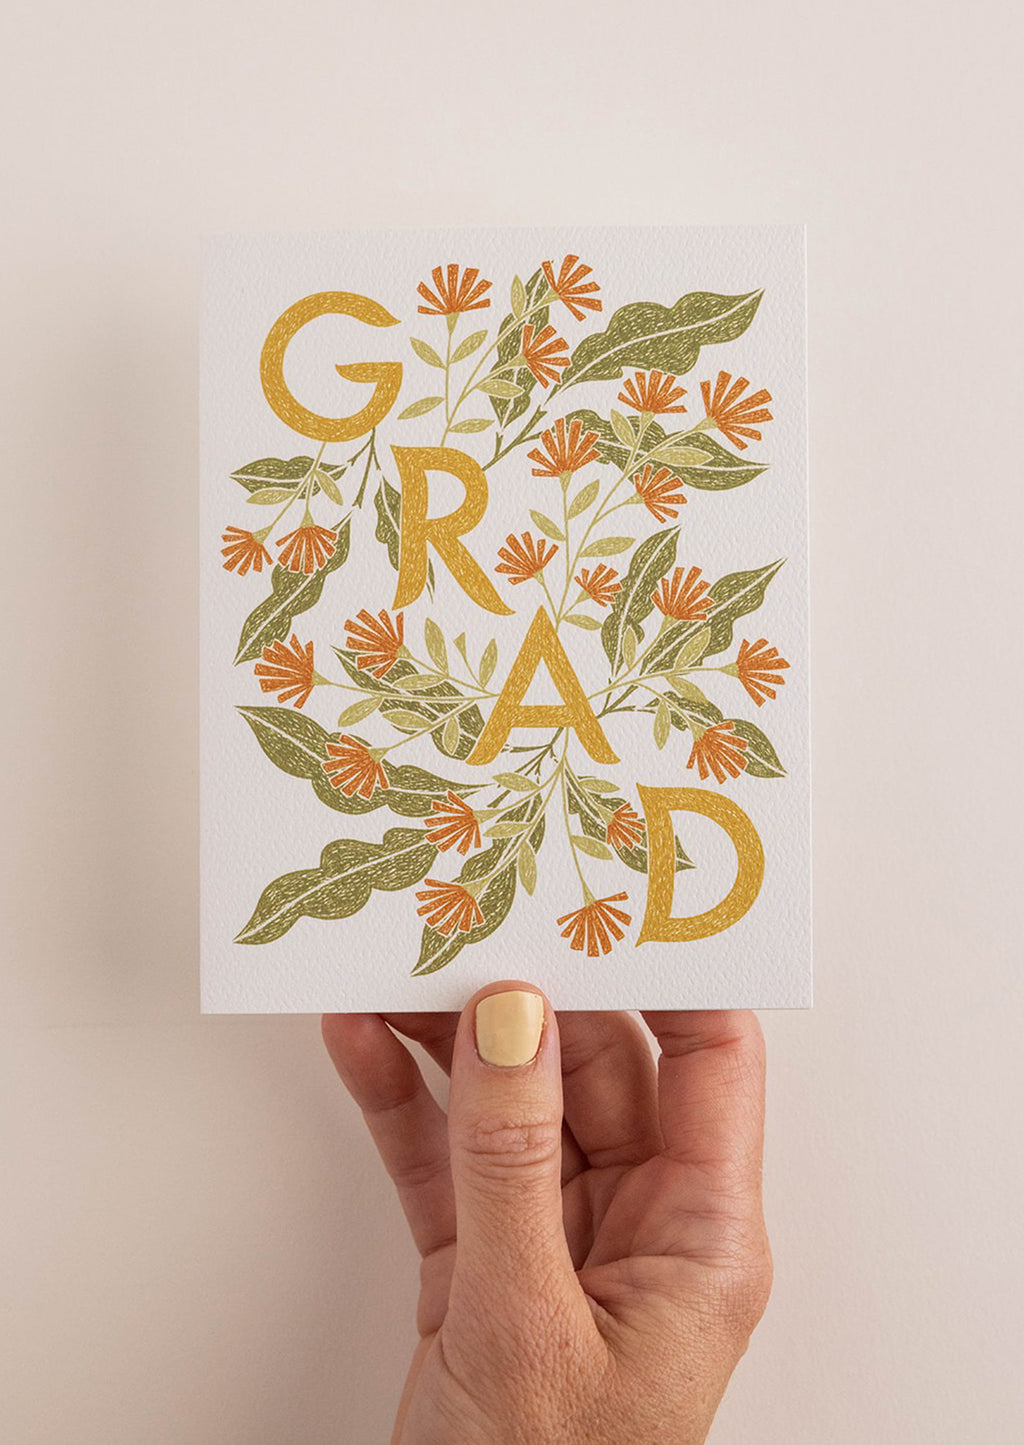 2: A floral print card reading "GRAD".